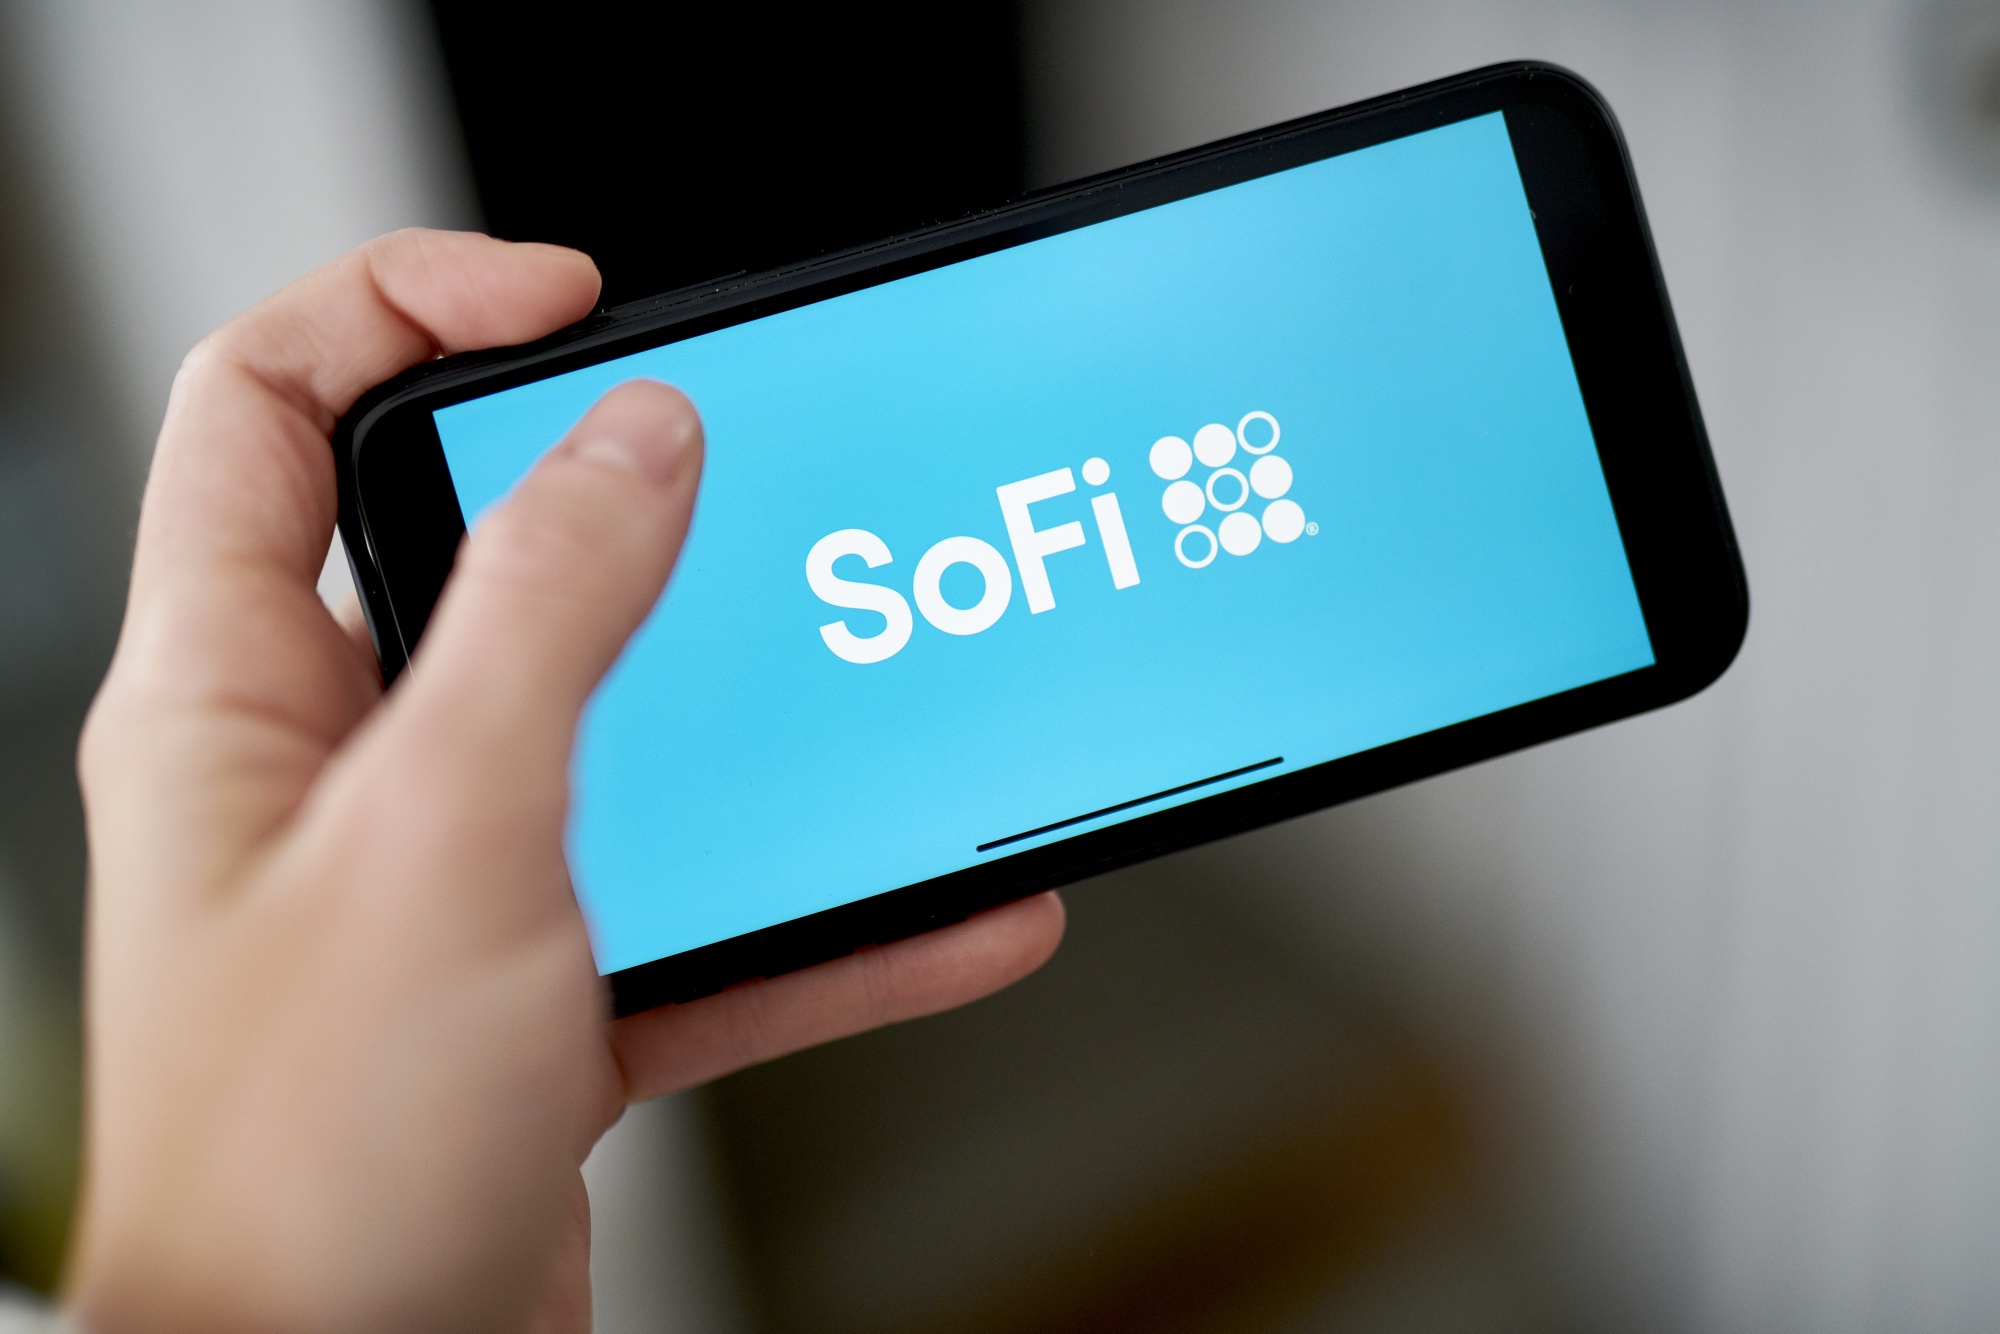 The logo for SoFi on a smartphone.